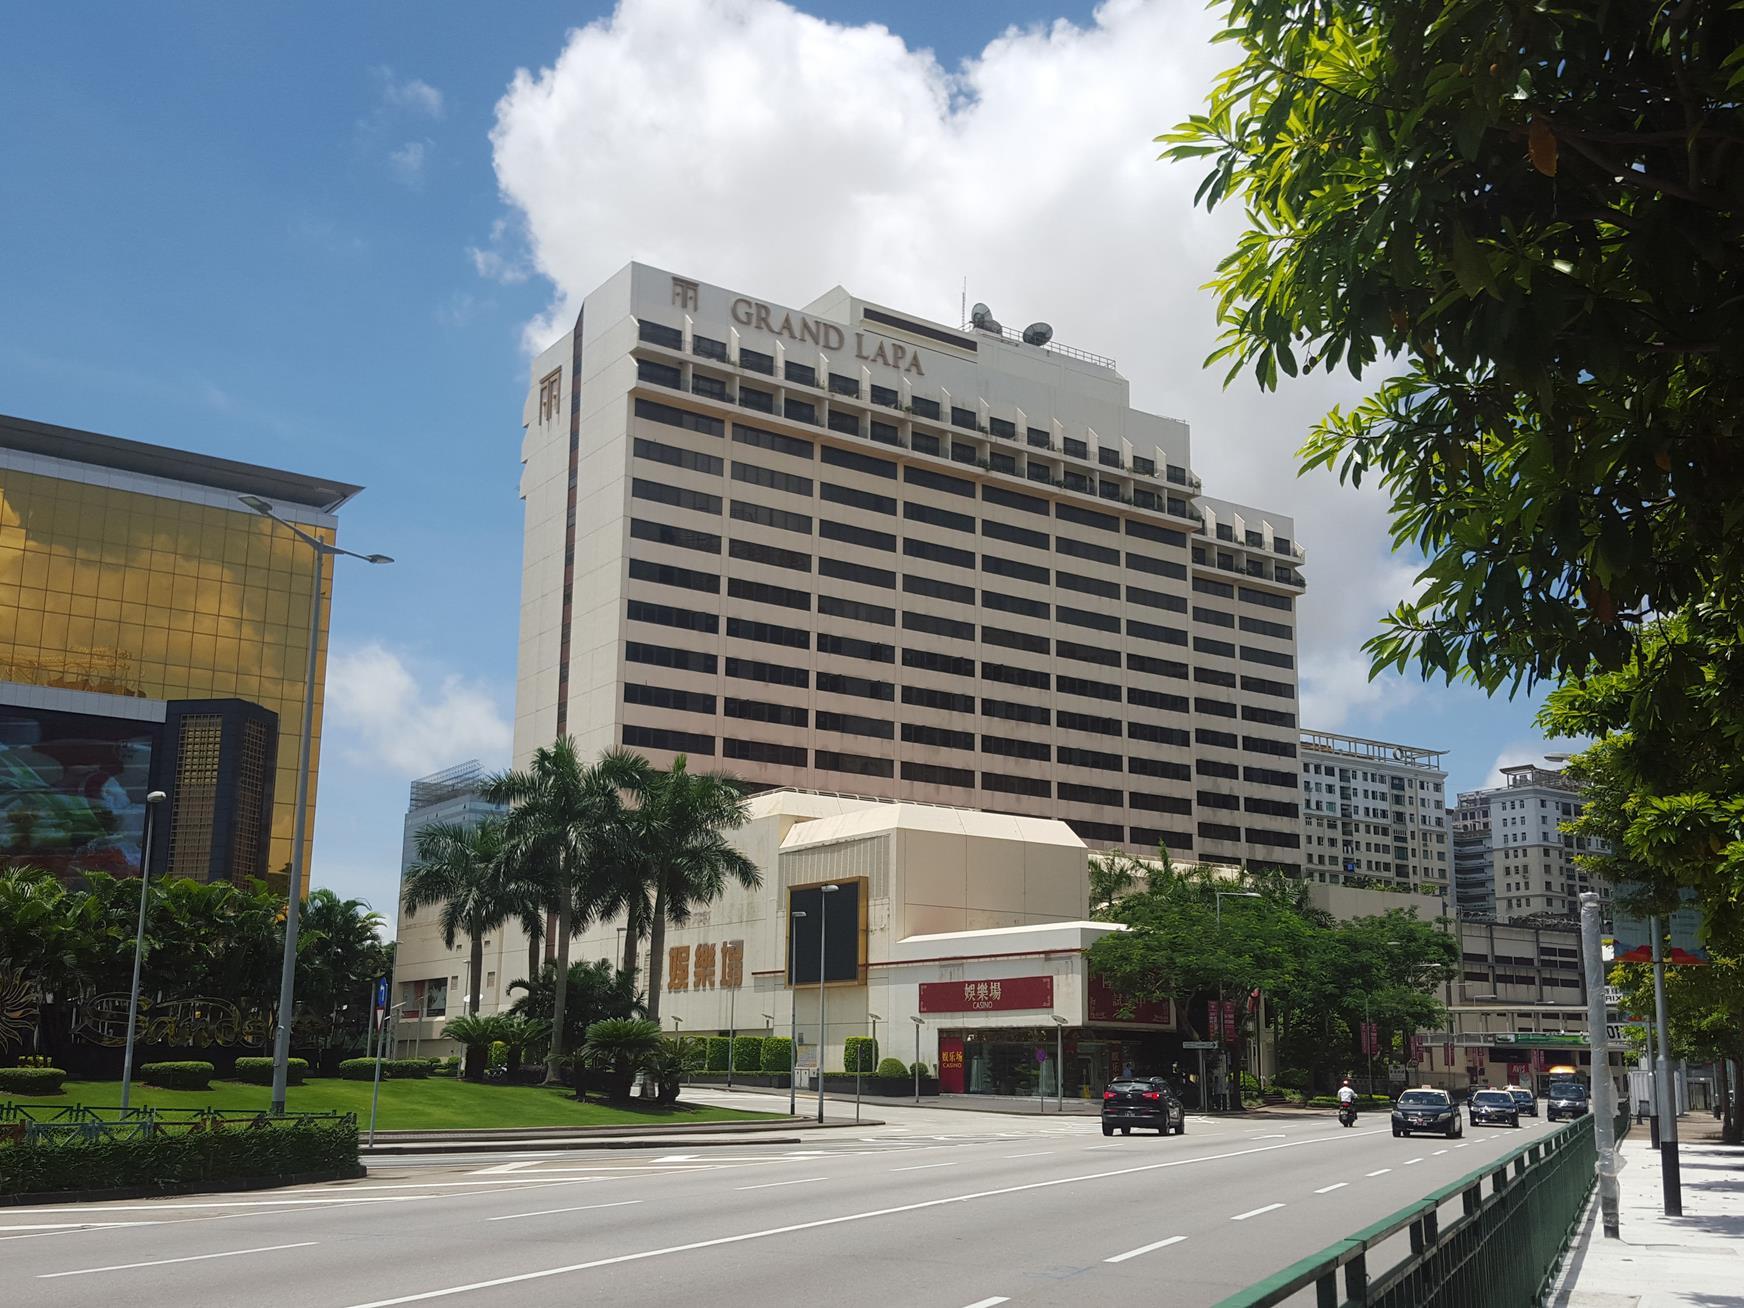 Grand Lapa Hotel no longer for quarantine